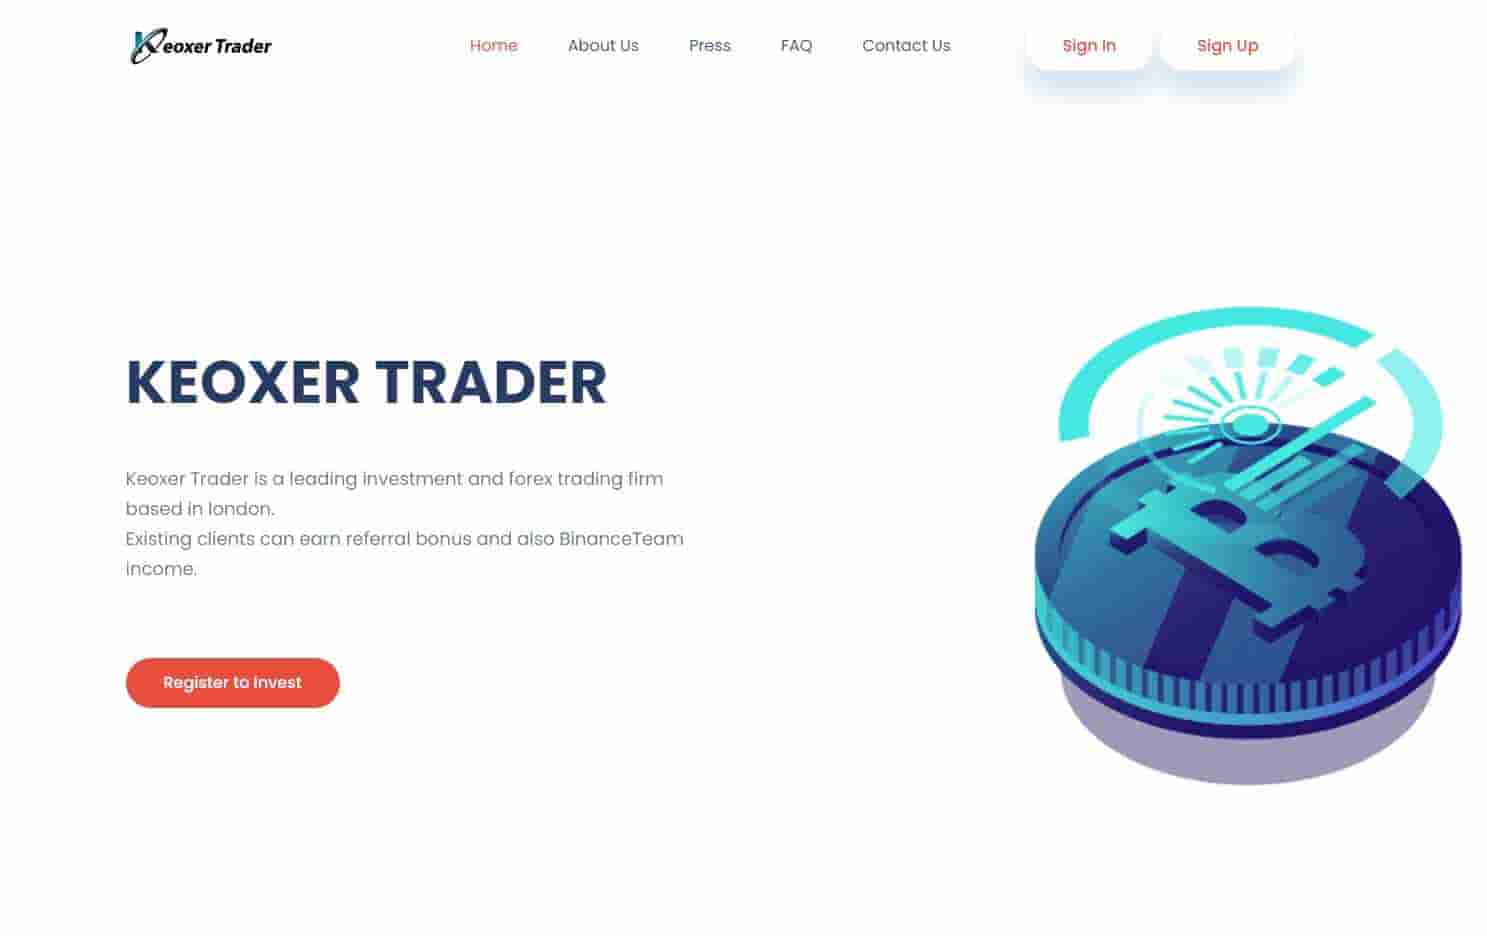 Keoxer Trader Ltd